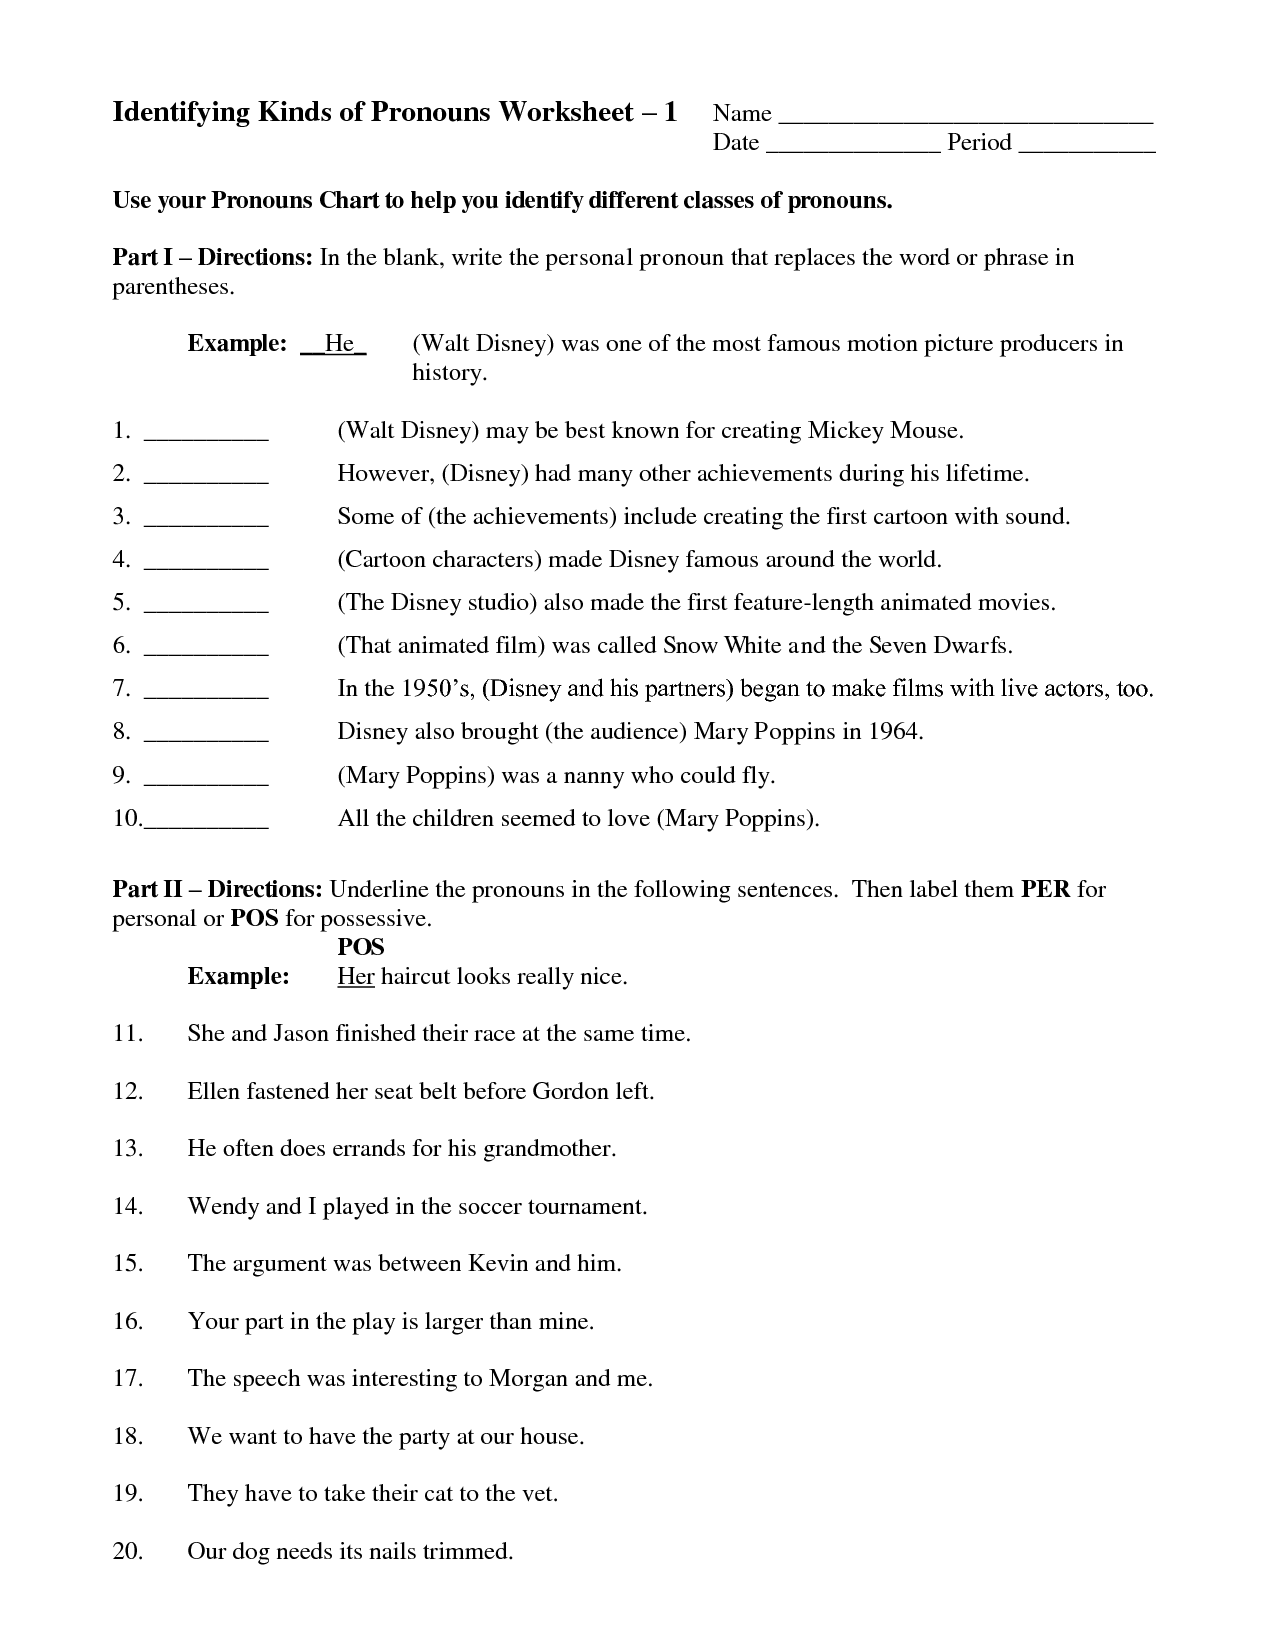 free-pronoun-worksheets-printable-worksheet-template